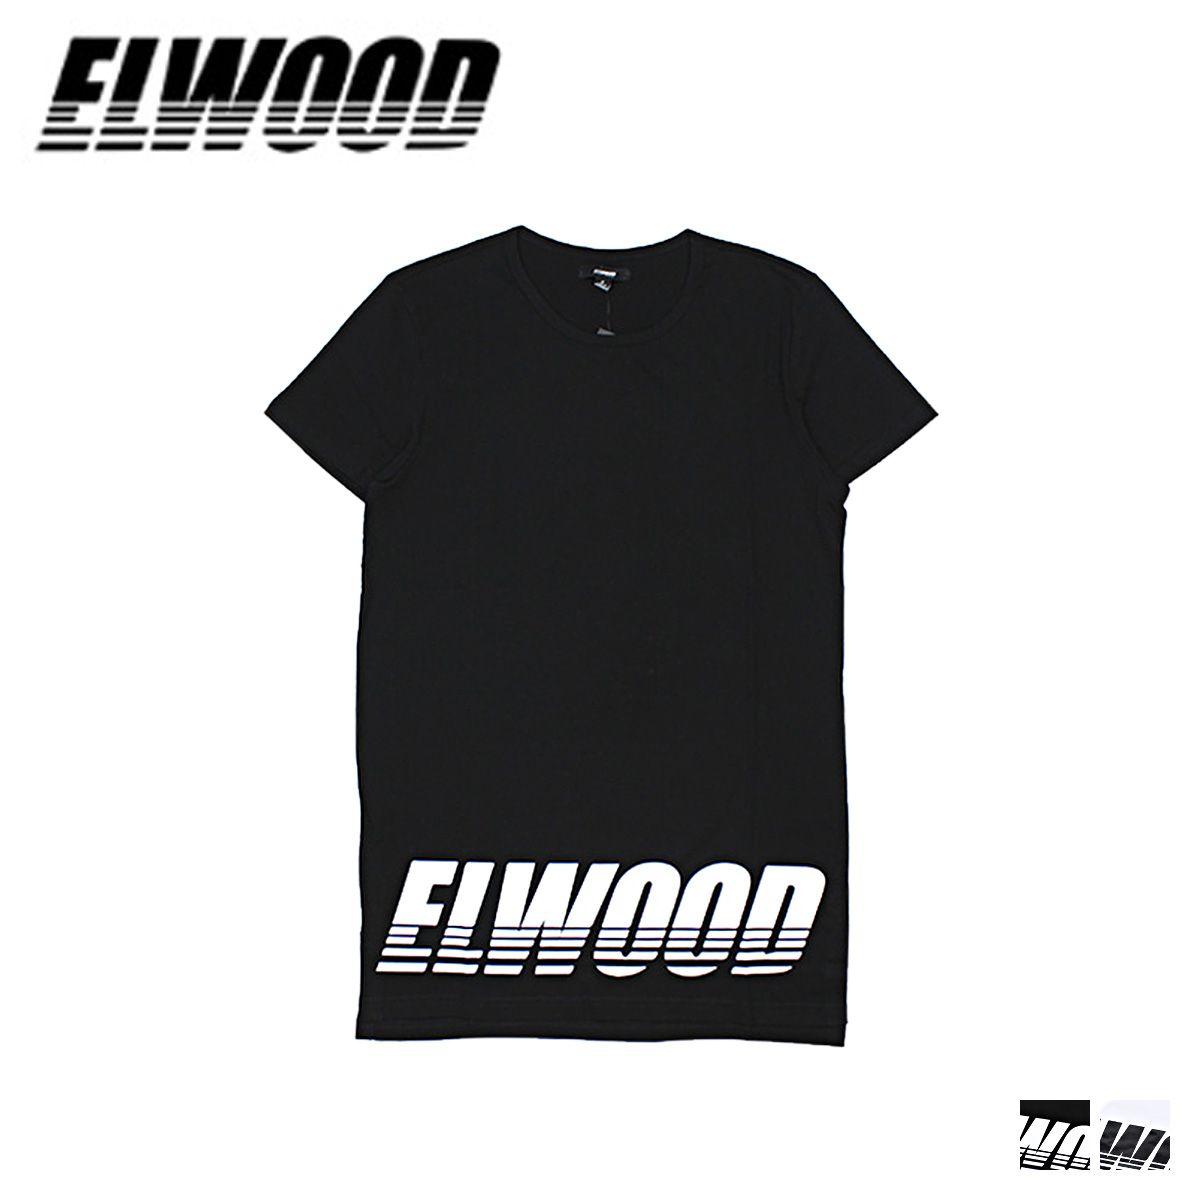 Famous Shirts Logo - Sugar Online Shop: Elwood ELWOOD T shirt short sleeve men's short